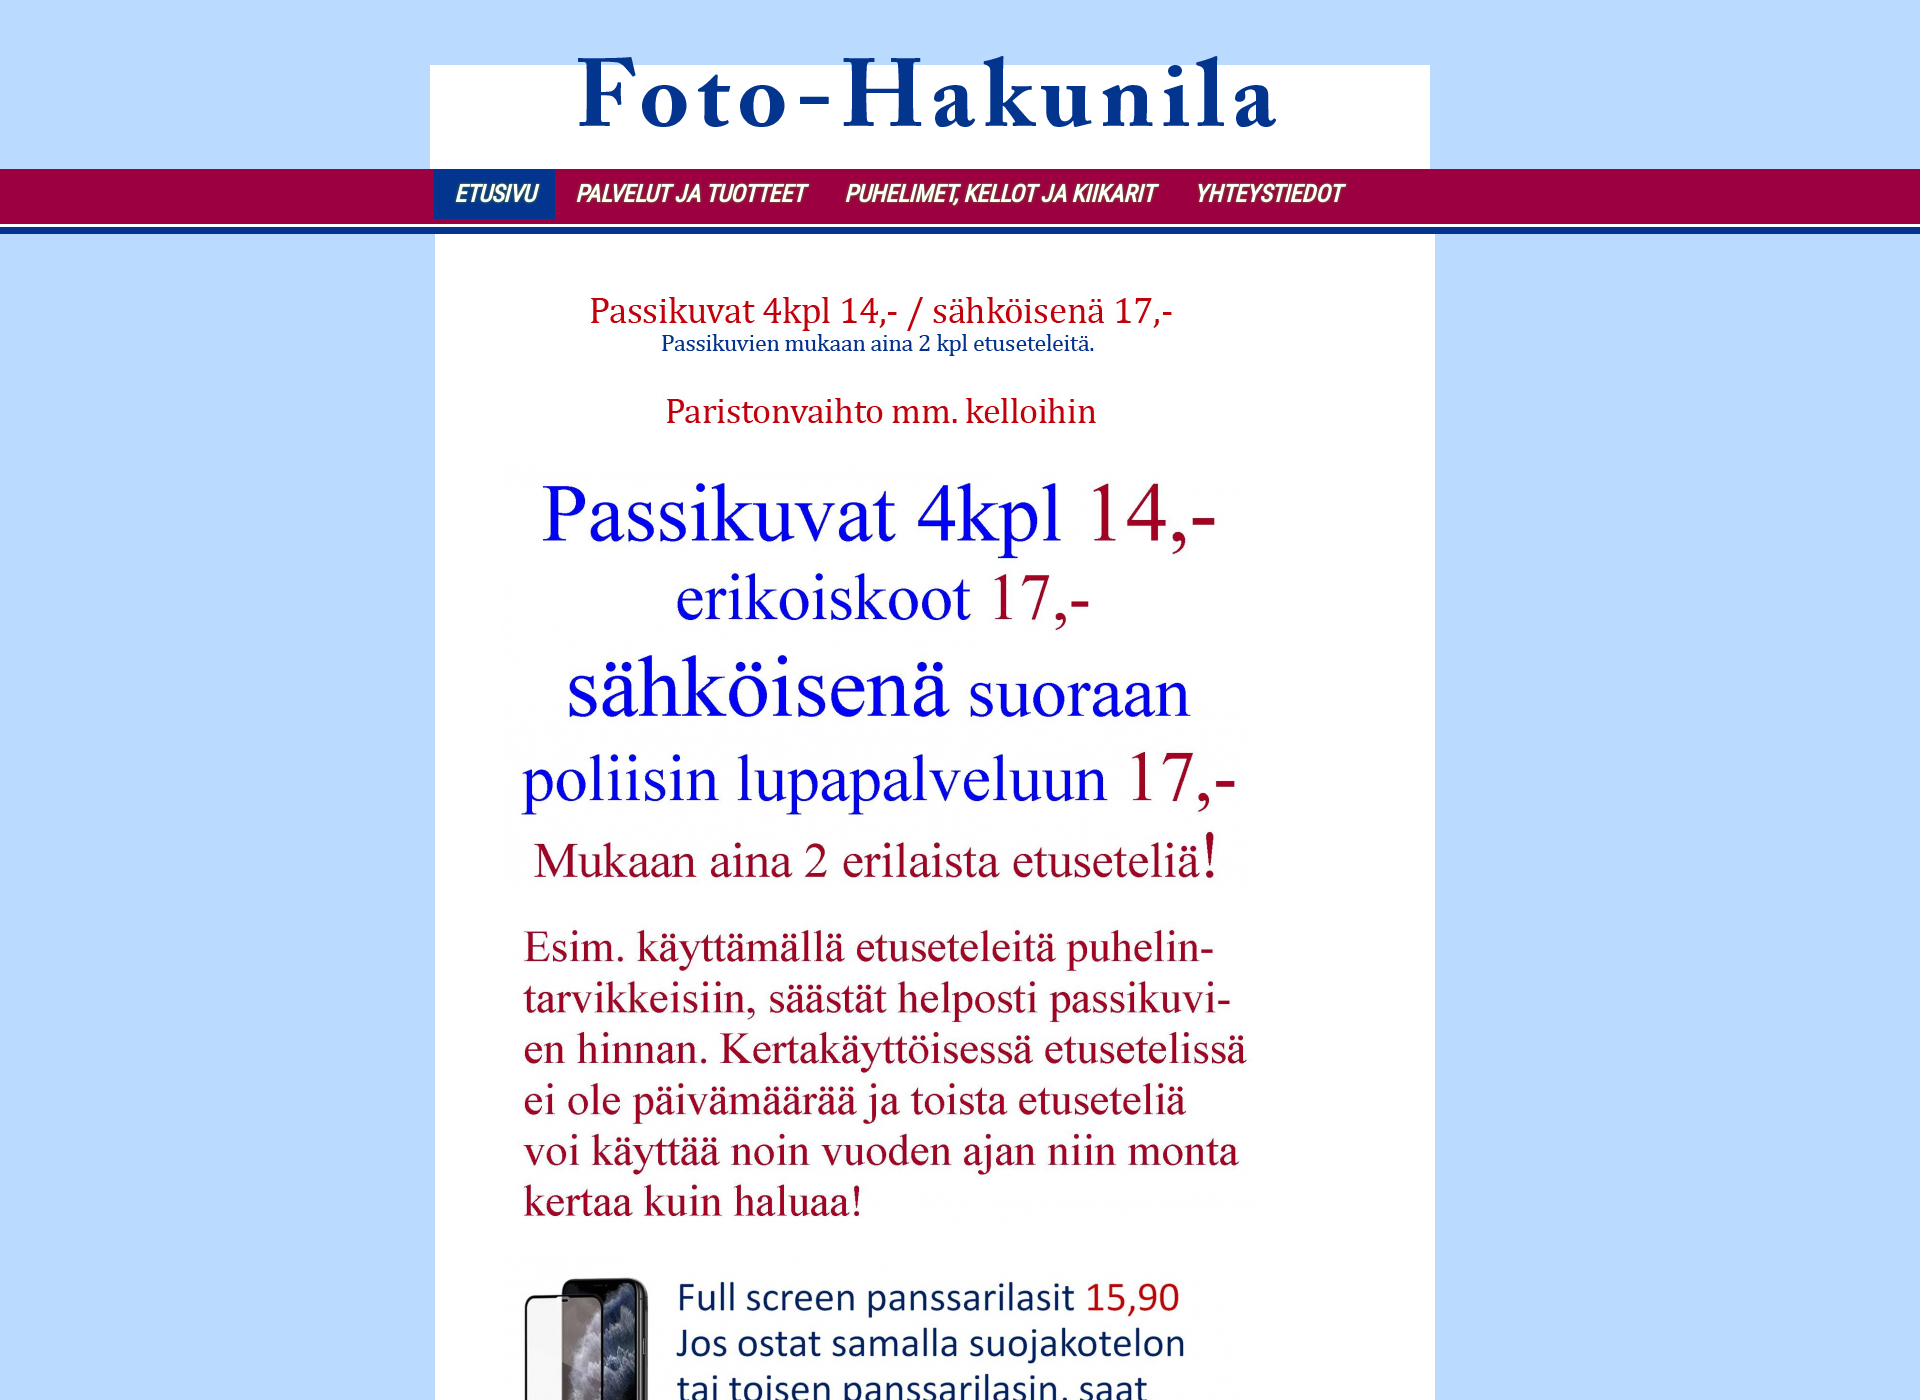 Näyttökuva fotohakunila.fi